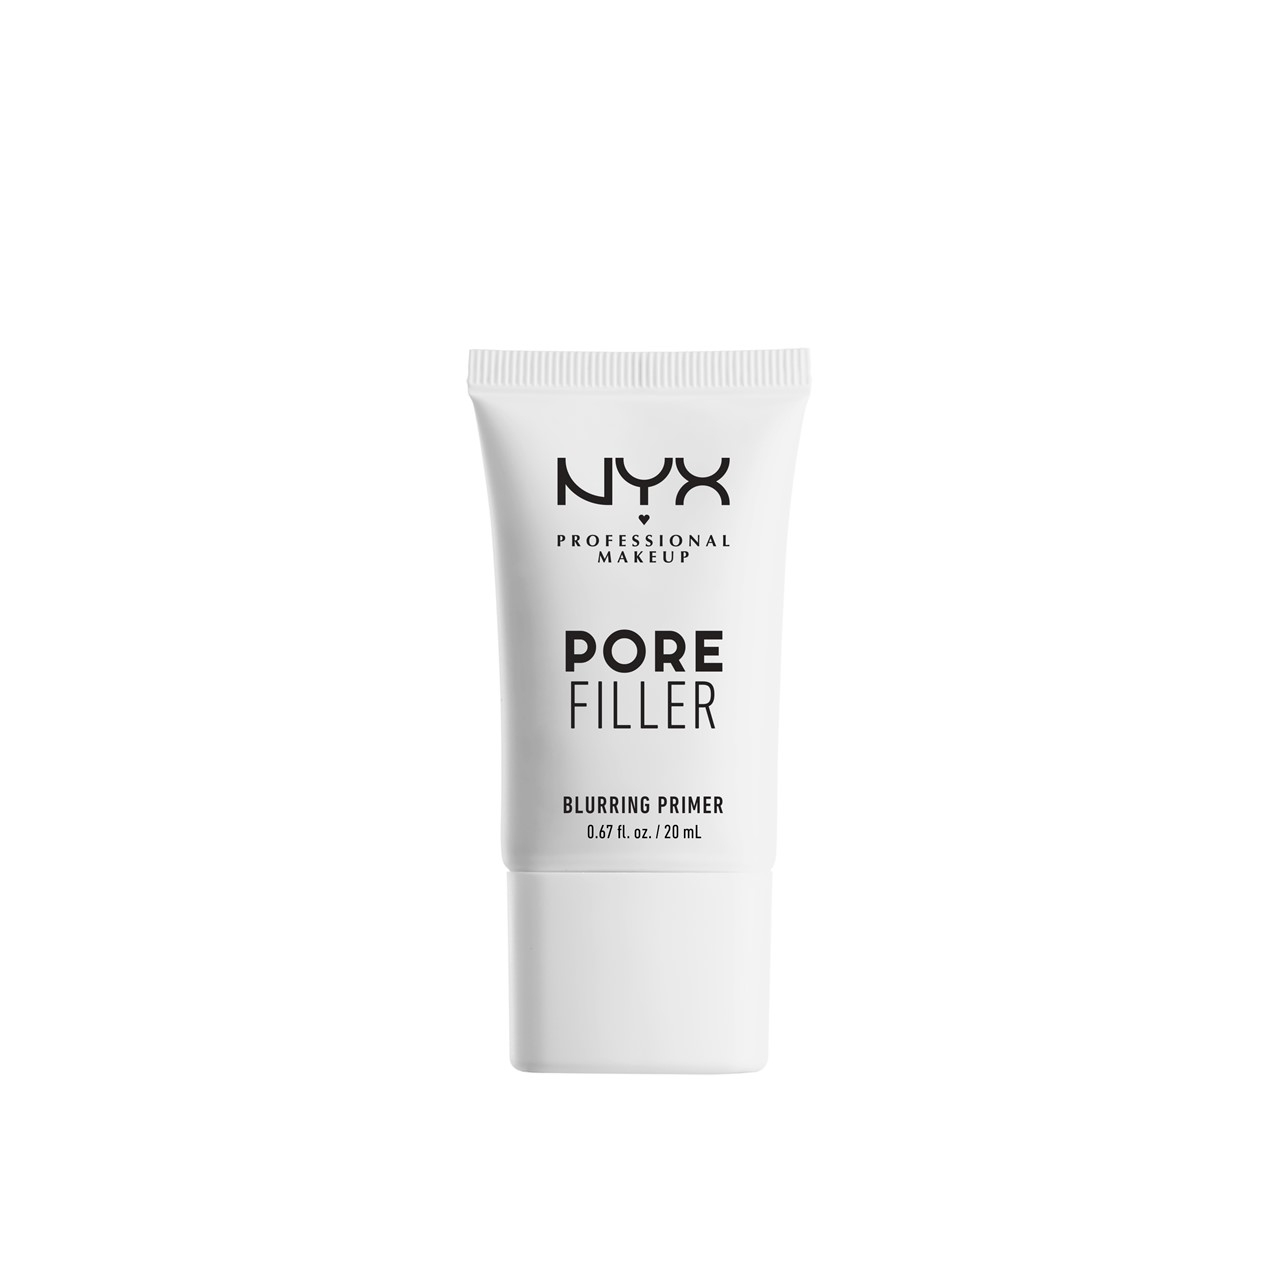 Buy NYX Primer USA · oz) Pro 20ml (0.68fl Pore Filler Makeup